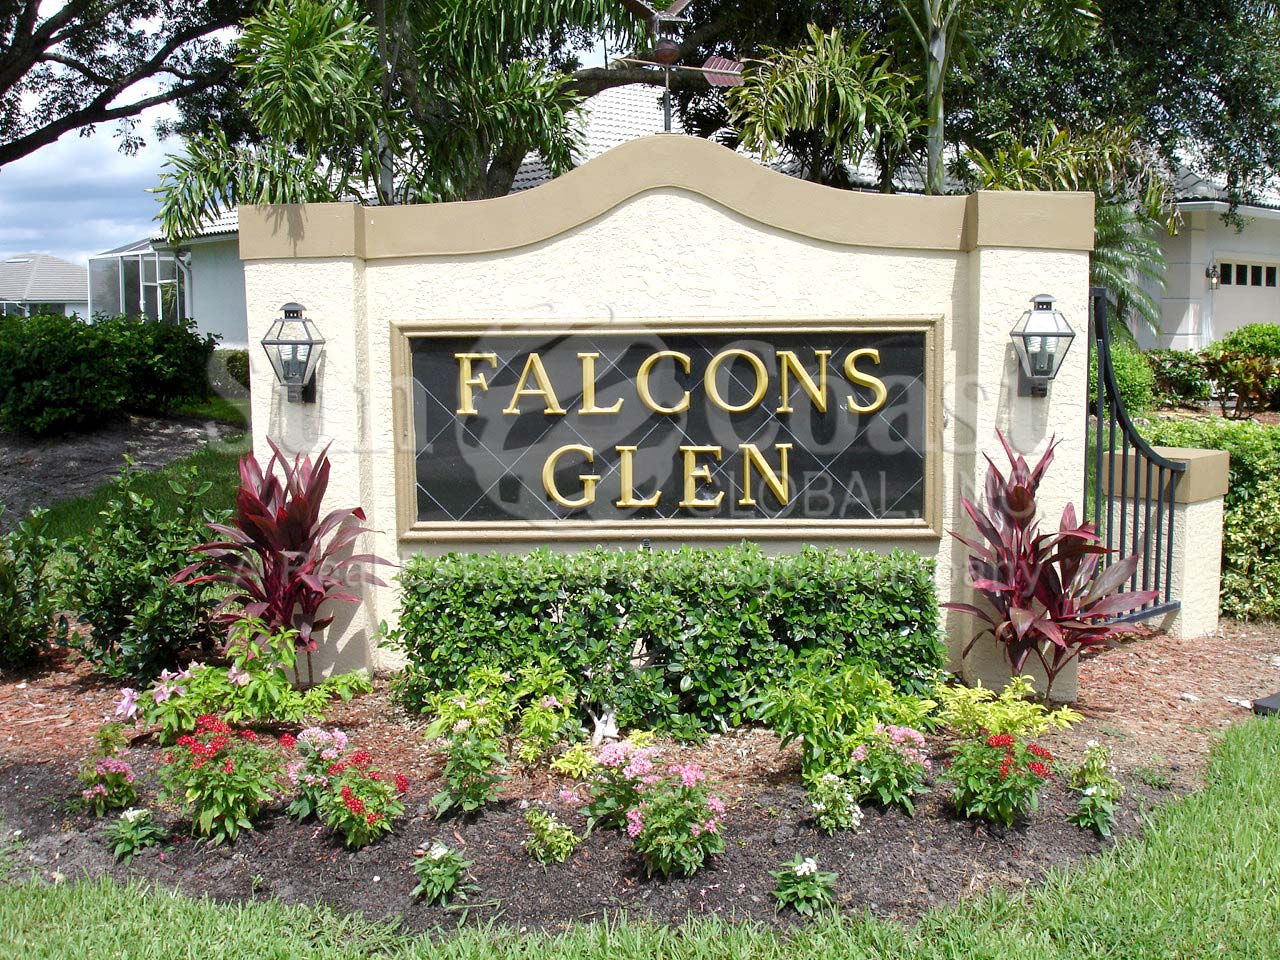 Falcons Glen signage